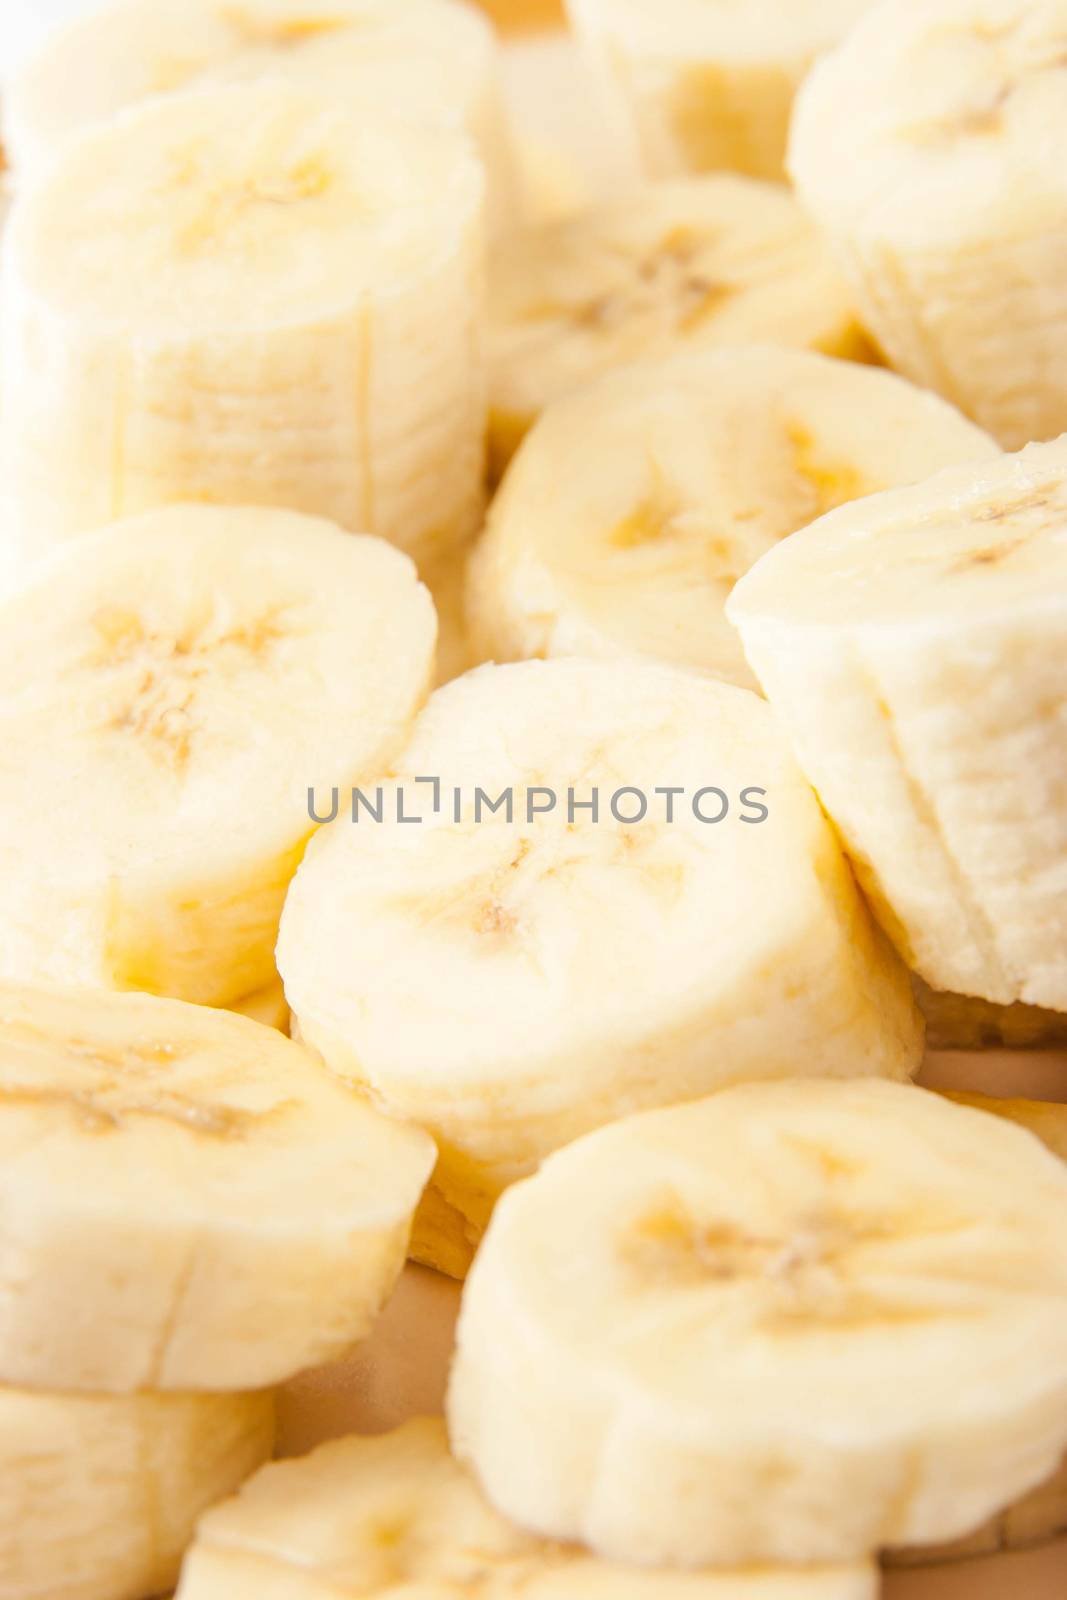 Banana slices background vertical